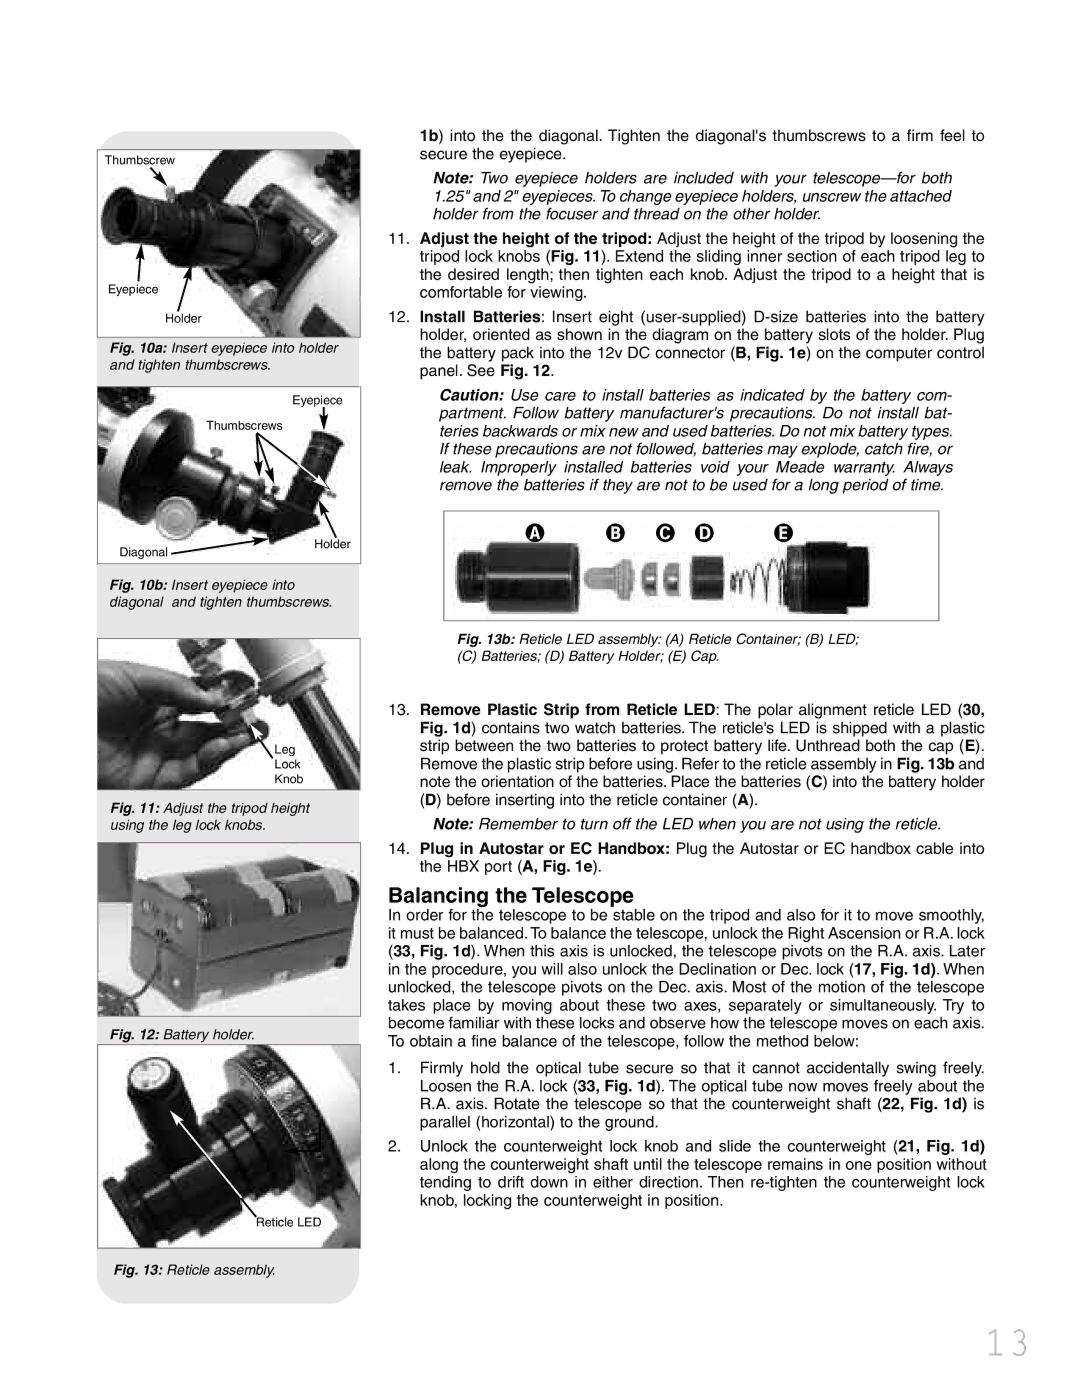 Meade LXD 75 instruction manual C D E, Balancing the Telescope 